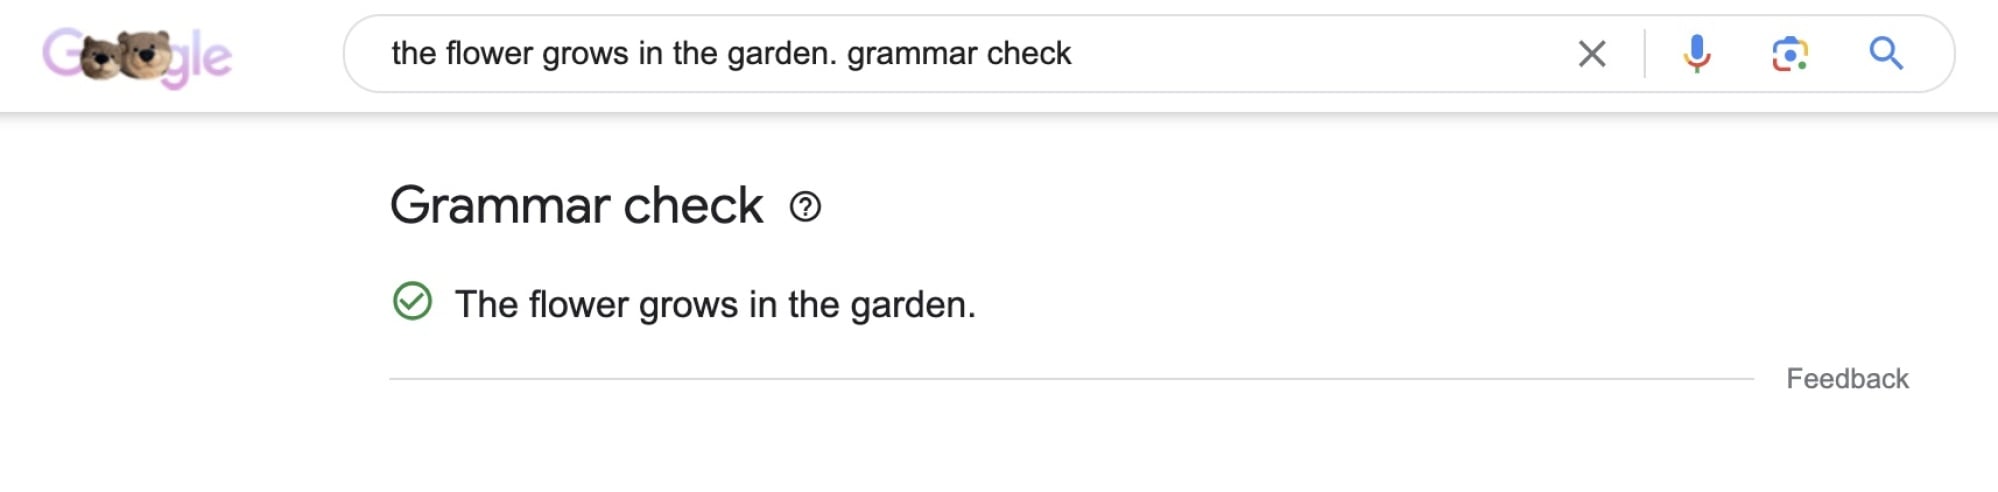 A grammar check example on Google. 